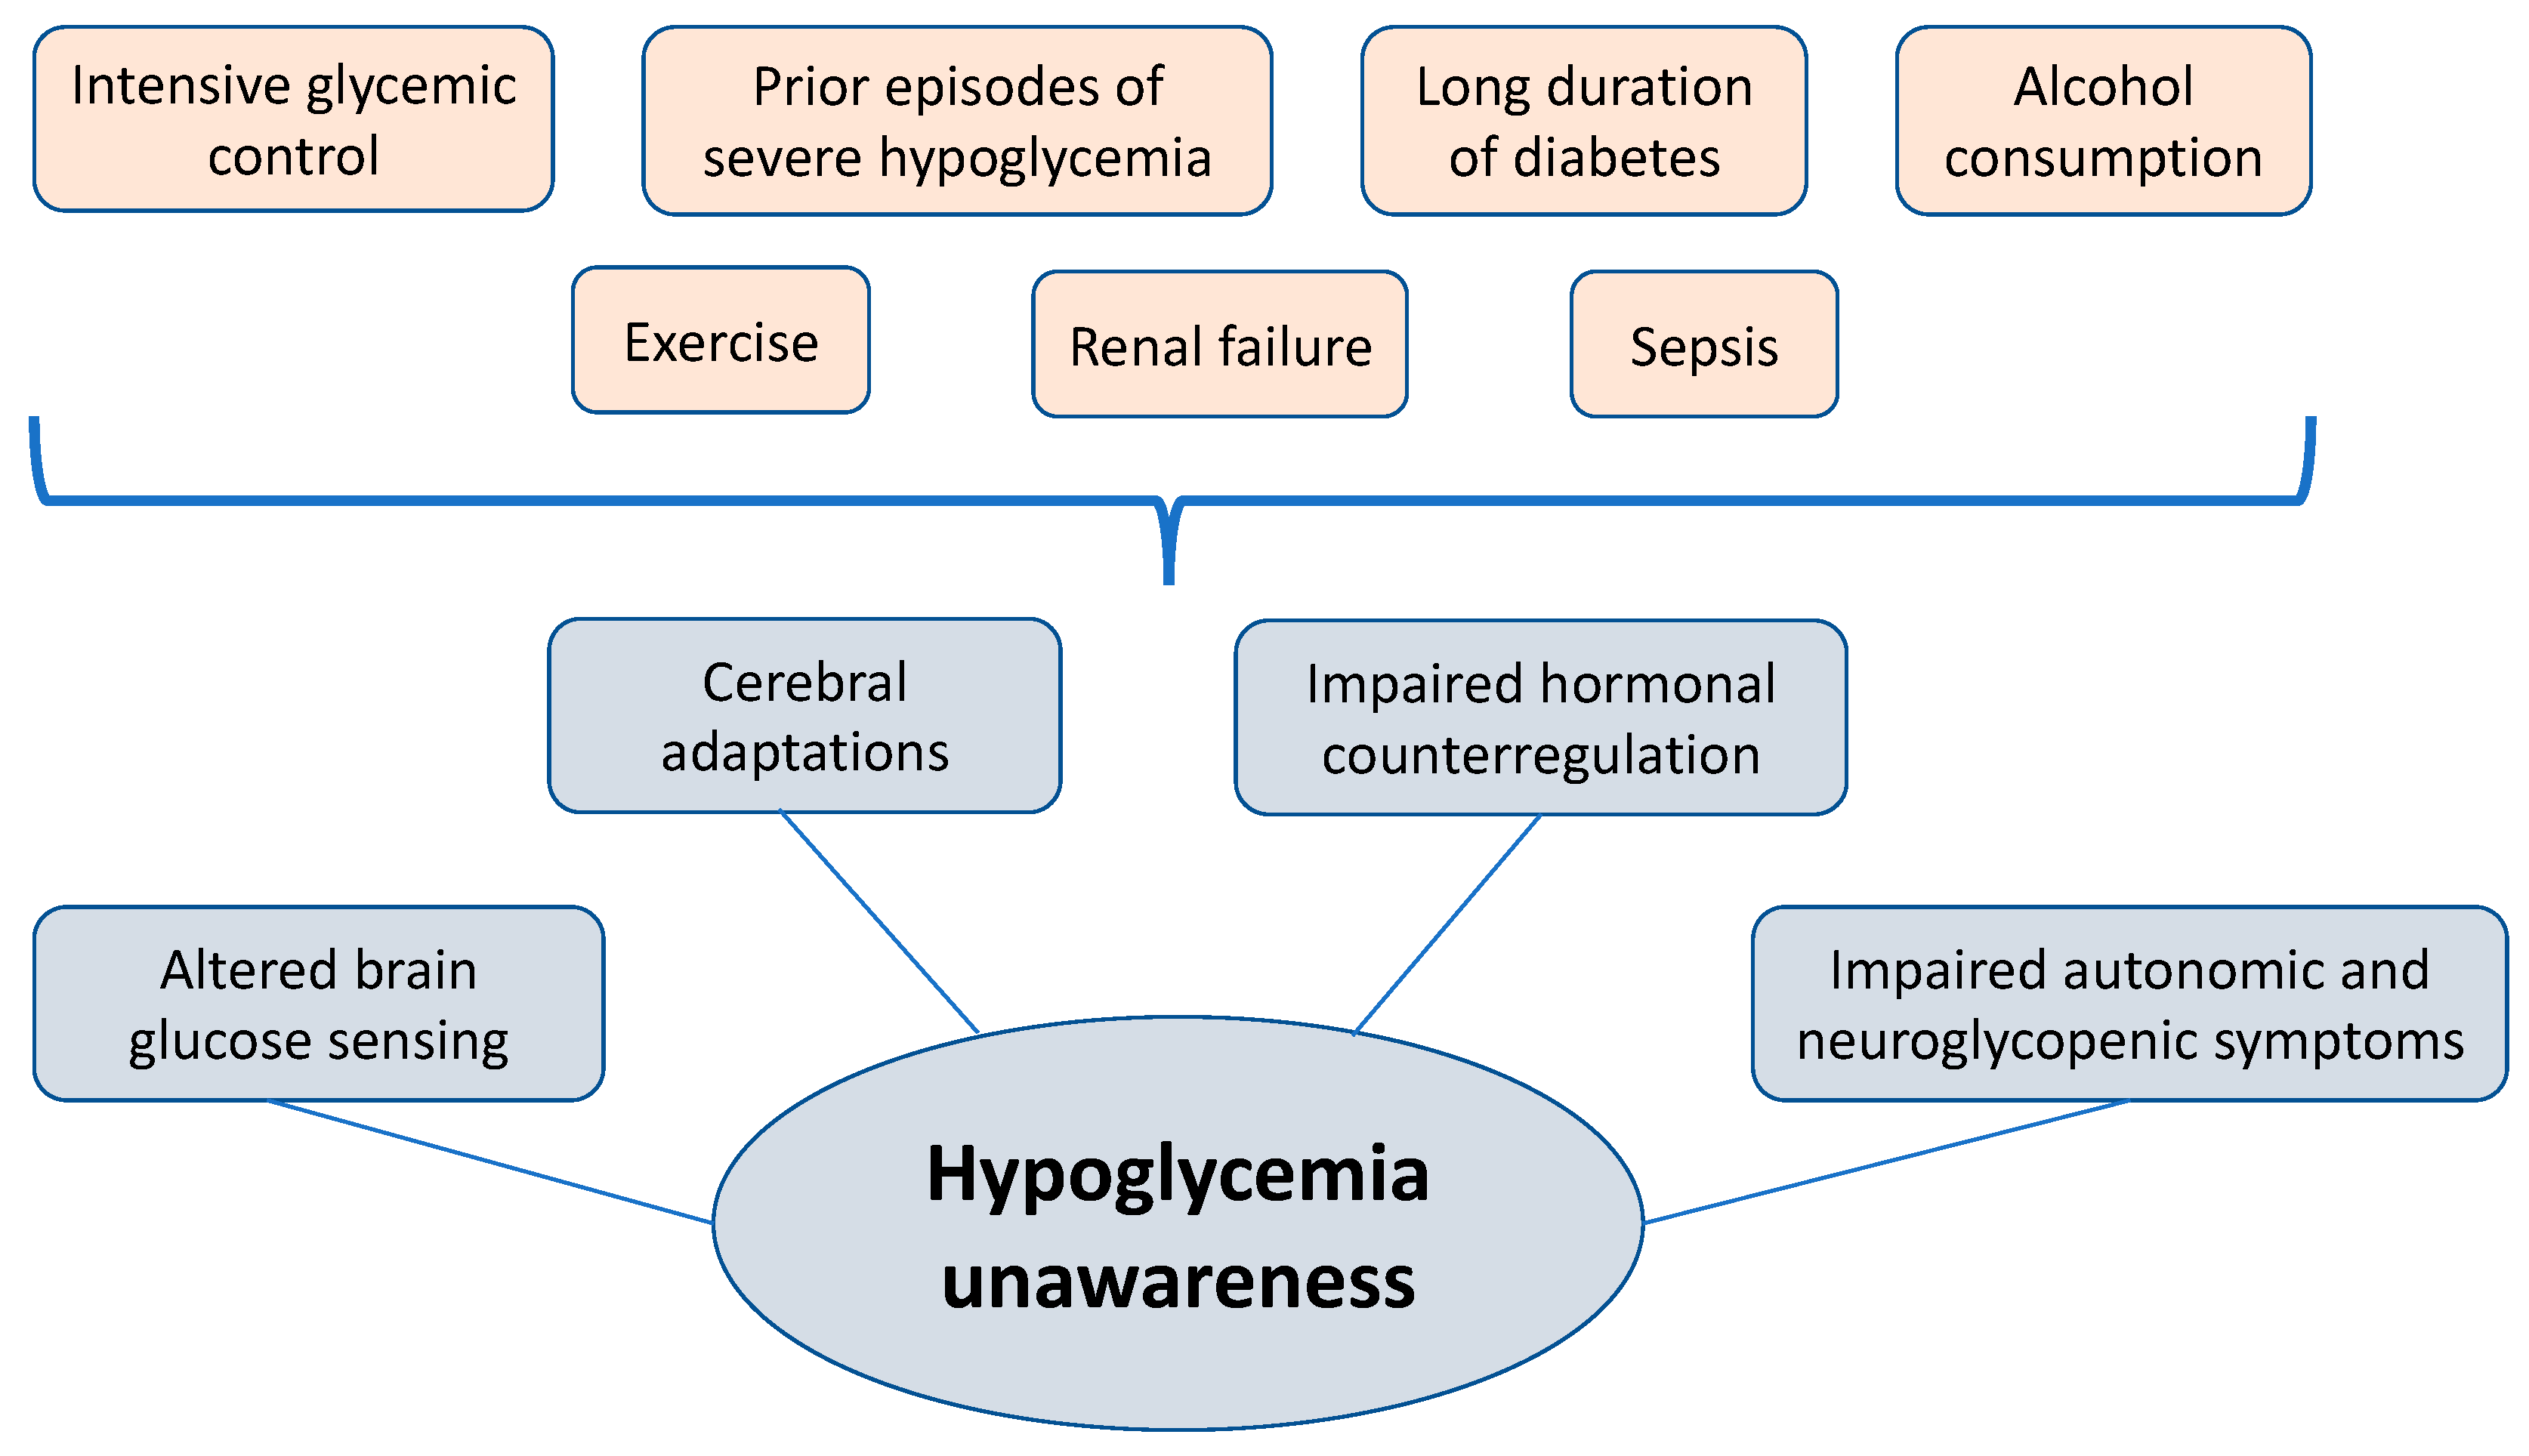 Hypoglycemic unawareness education